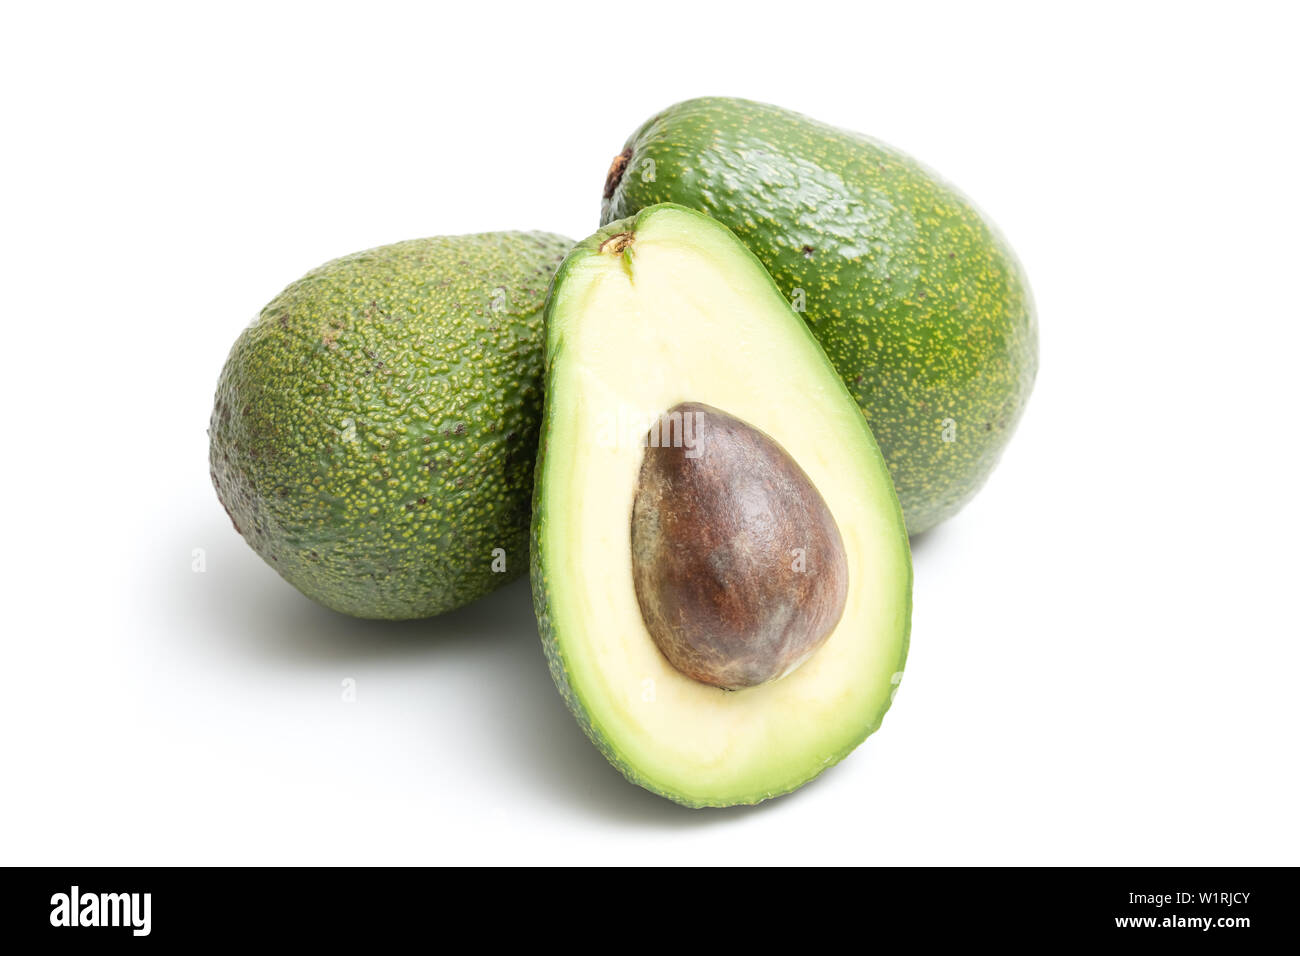 Description: Avocado isolated on a white background Stock Photo